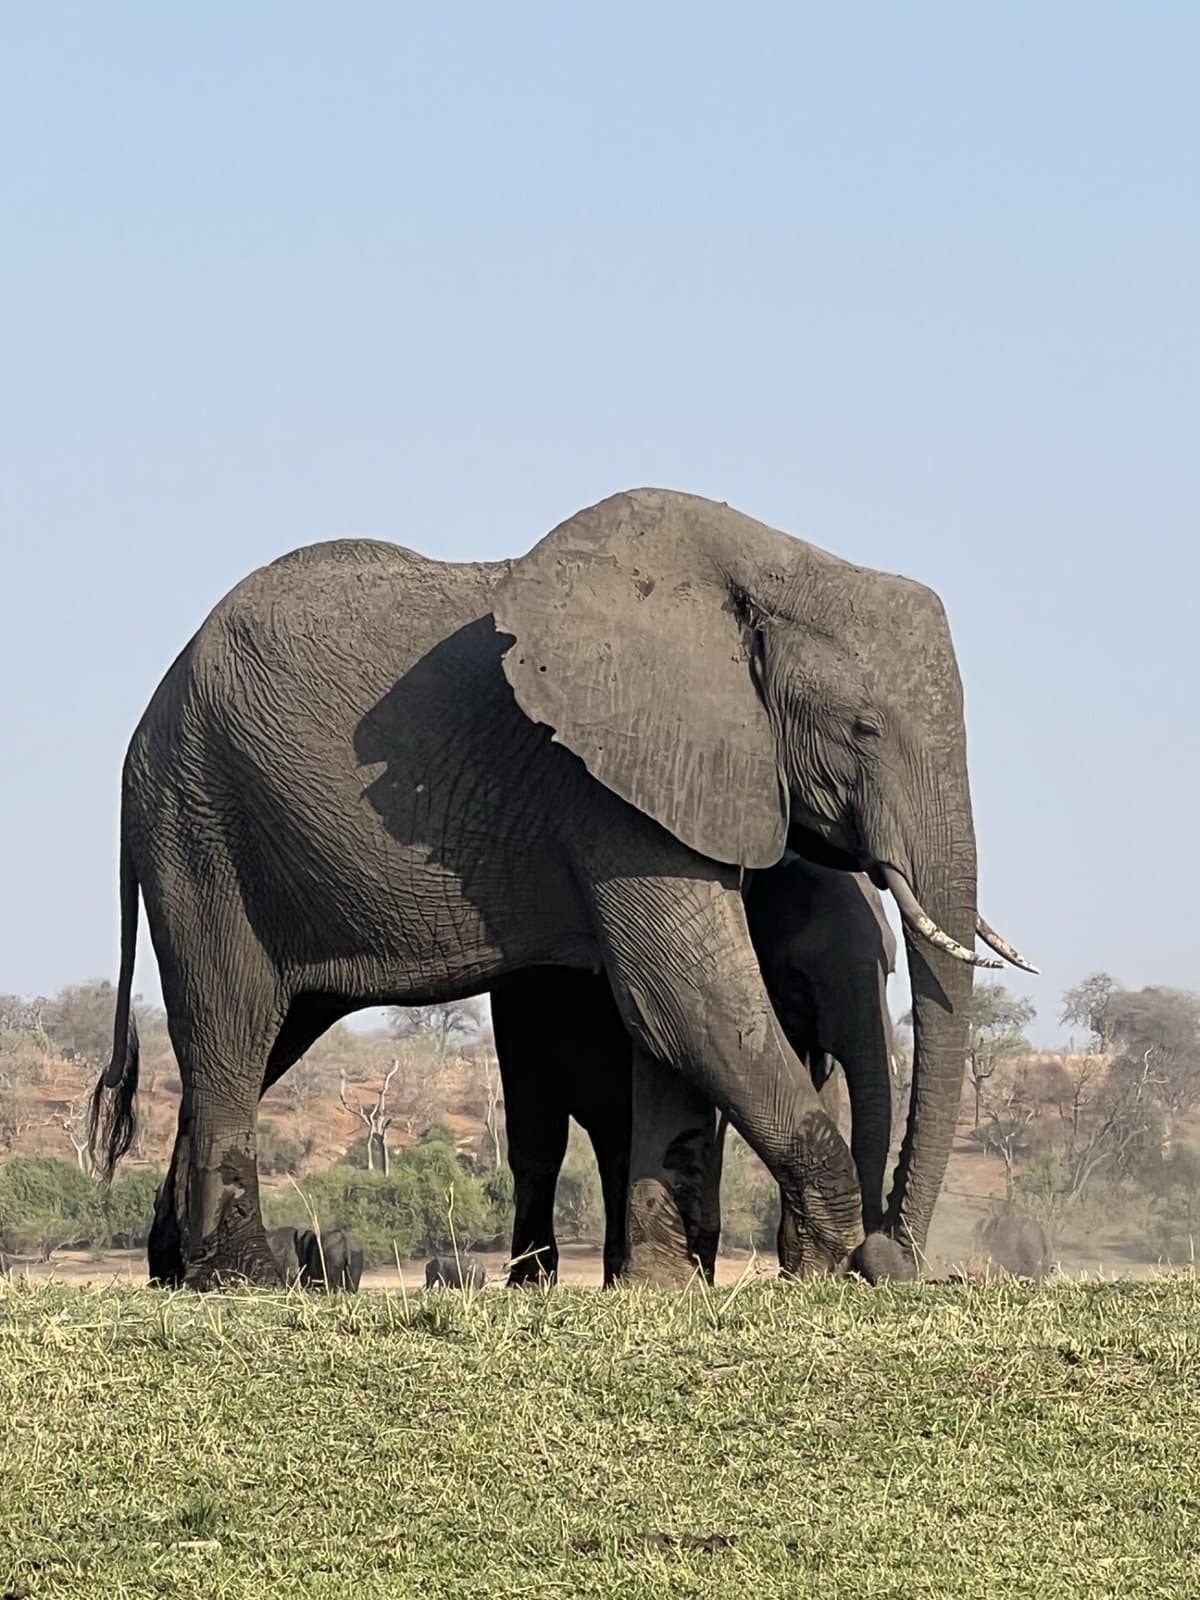 Chobe River elephants